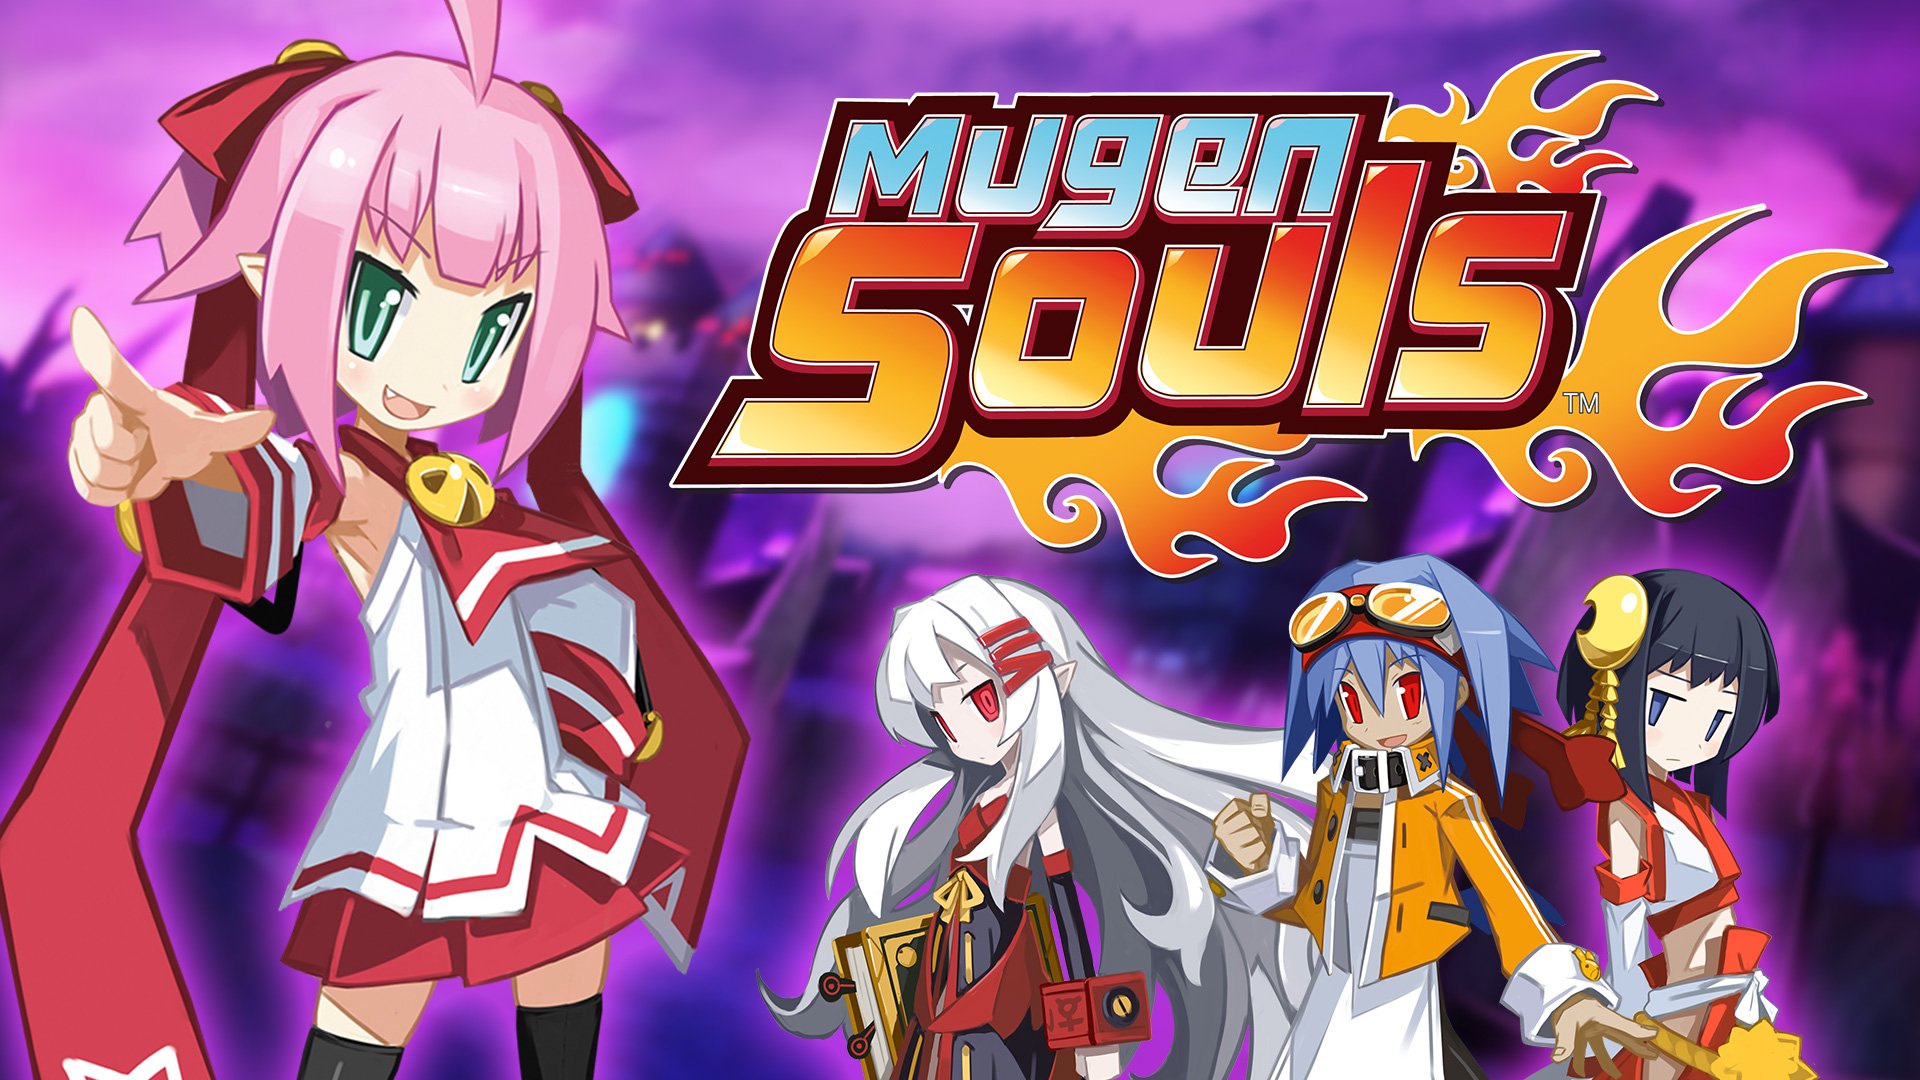 Mugen Souls Z on Steam